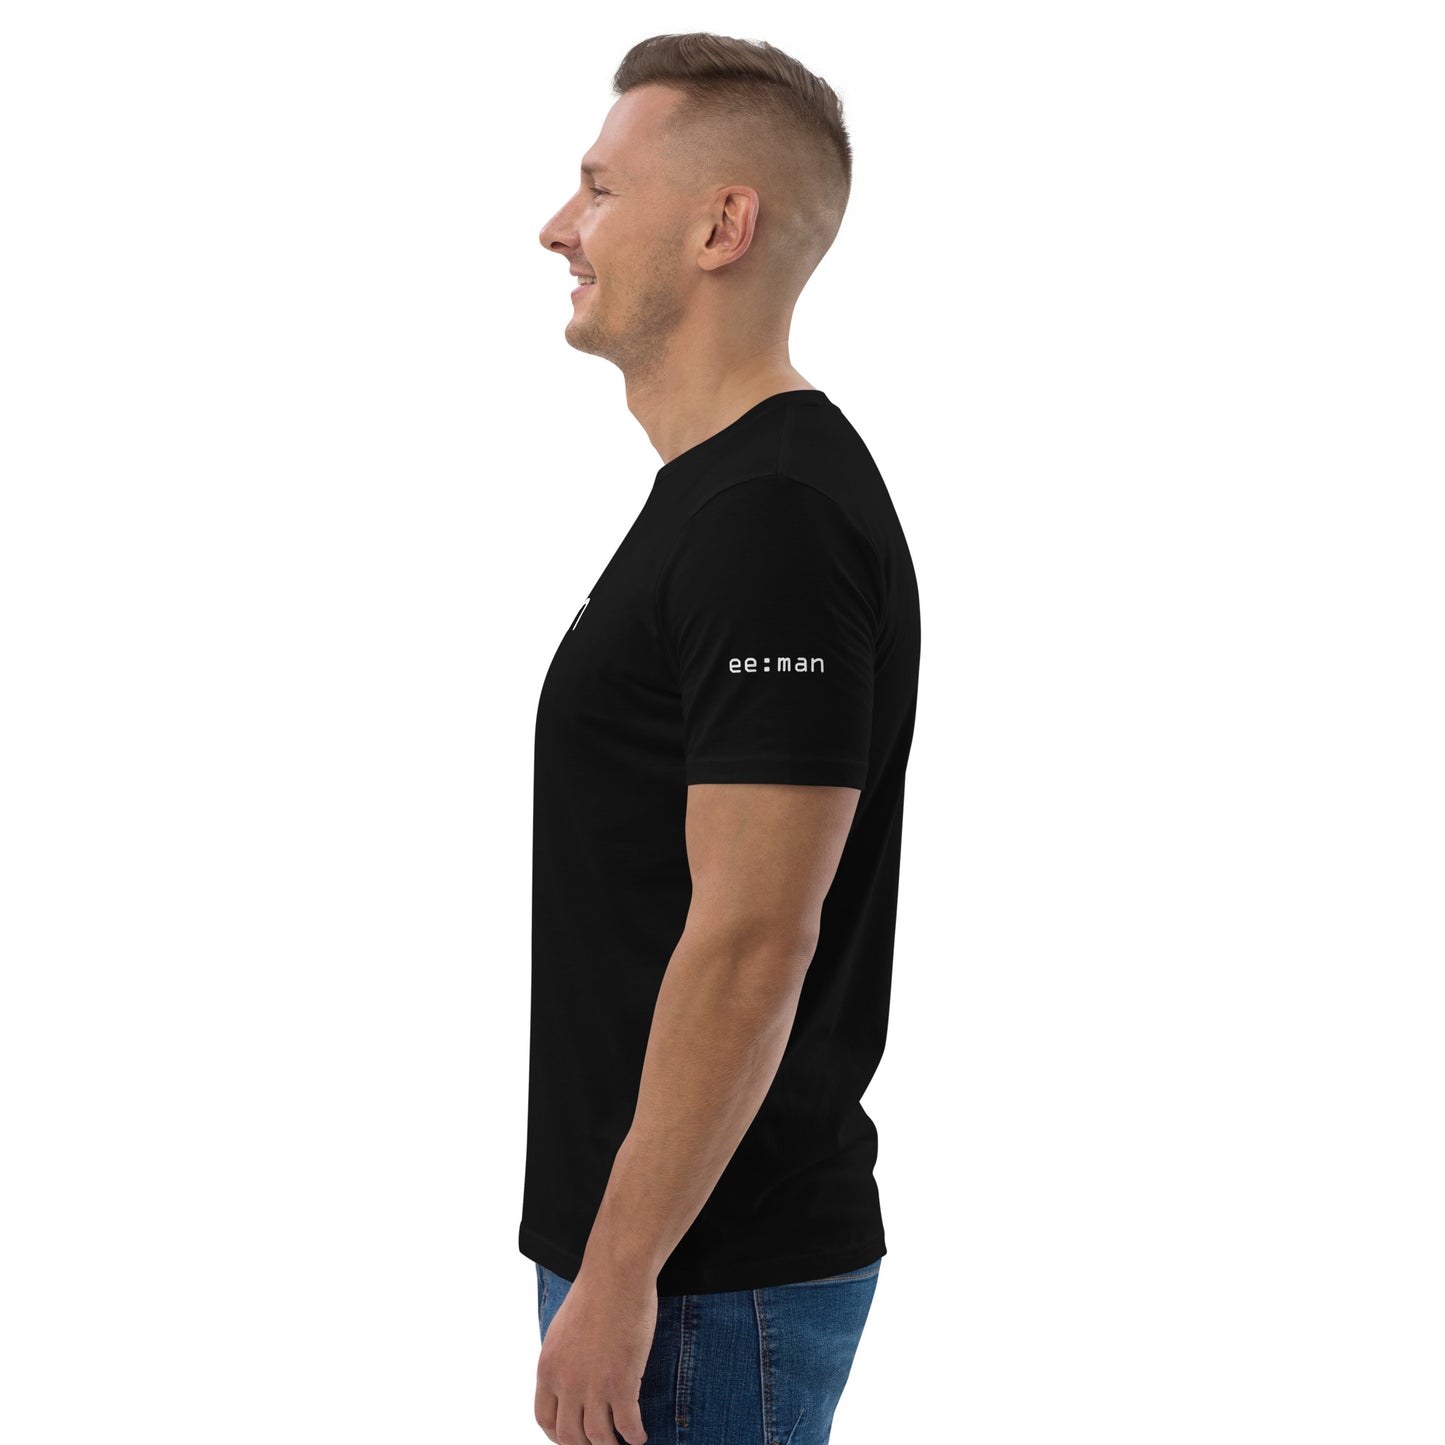 ee:man, official logo, Unisex organic cotton t-shirt